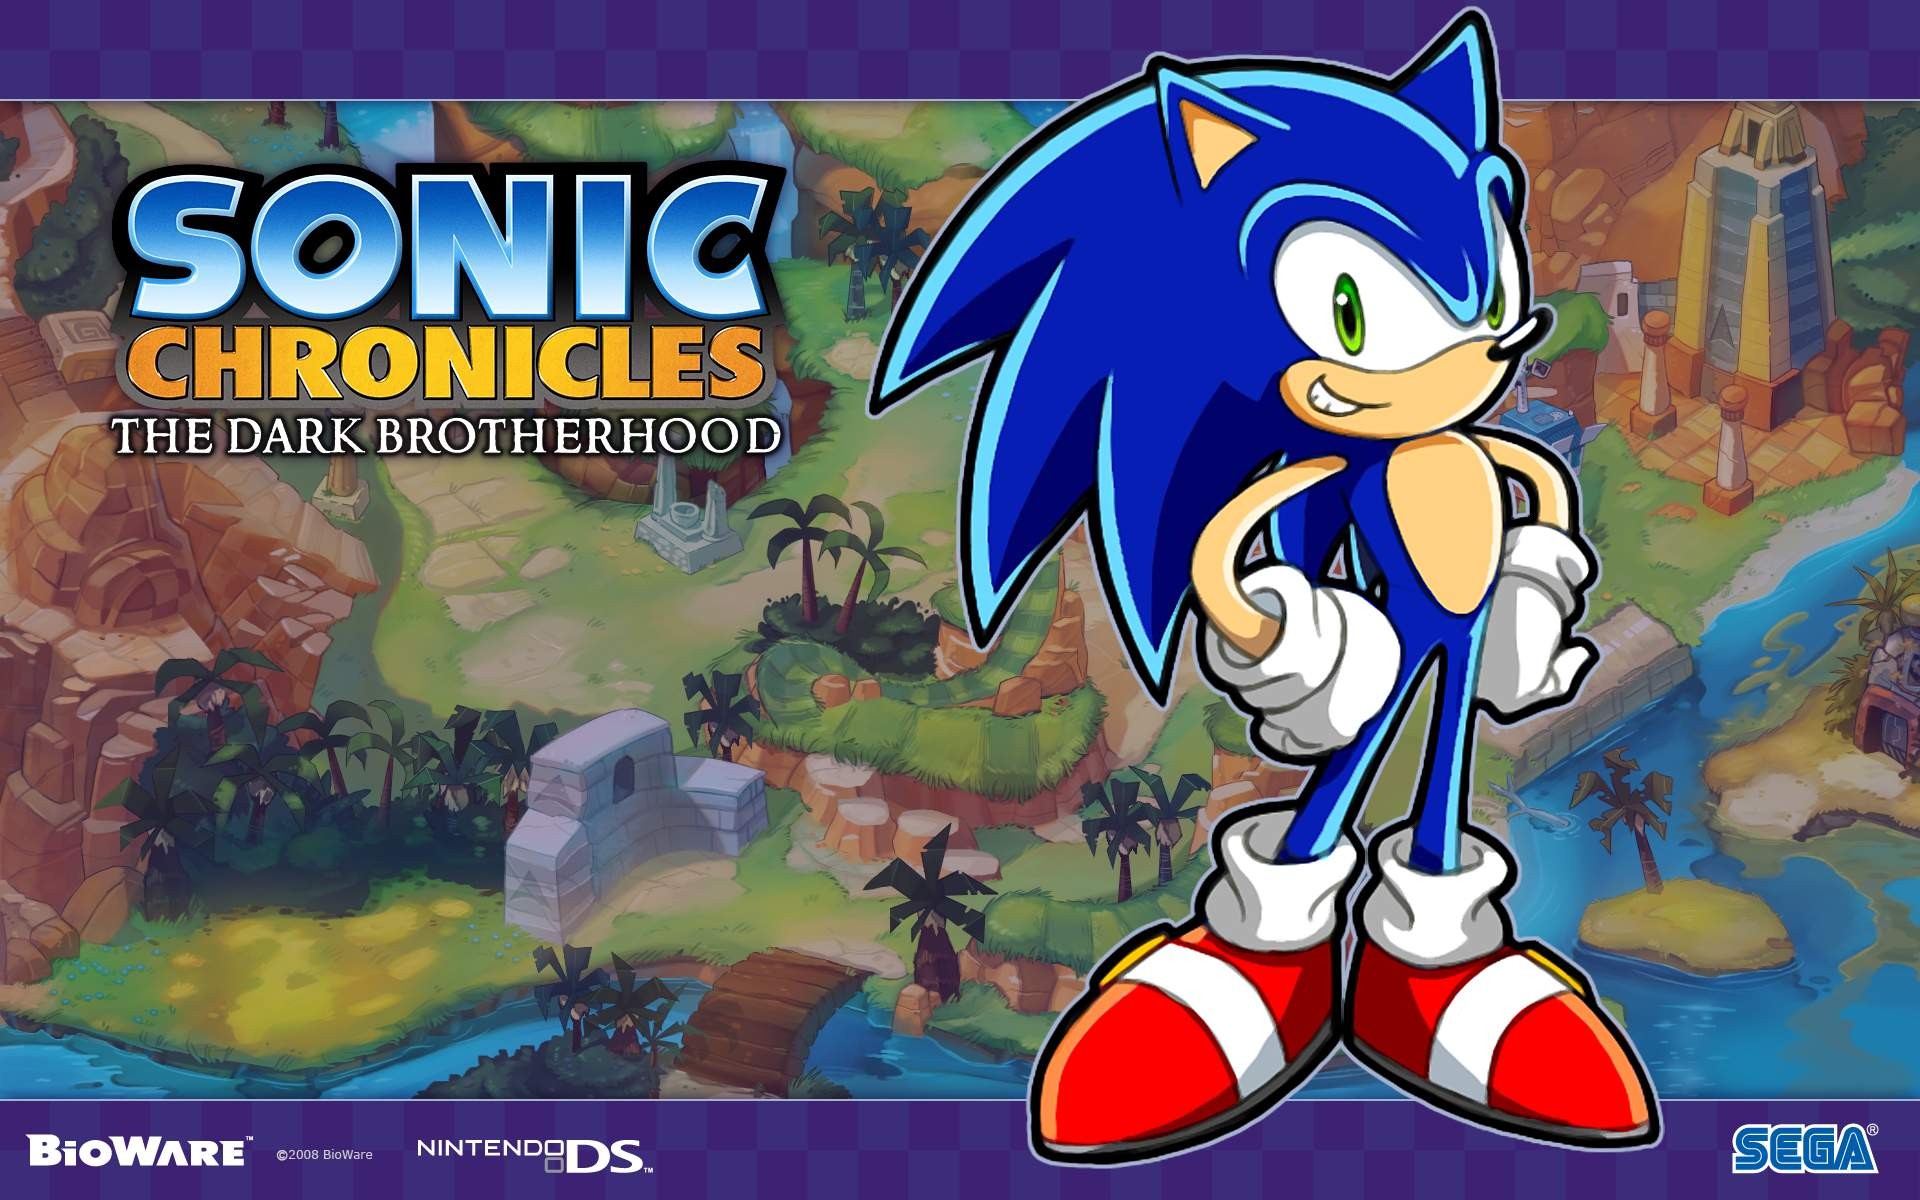 General 1920x1200 2008 (Year) video games Sonic the Hedgehog Sonic Chronicles: The Dark Brotherhood Bioware Sega Nintendo DS video game characters